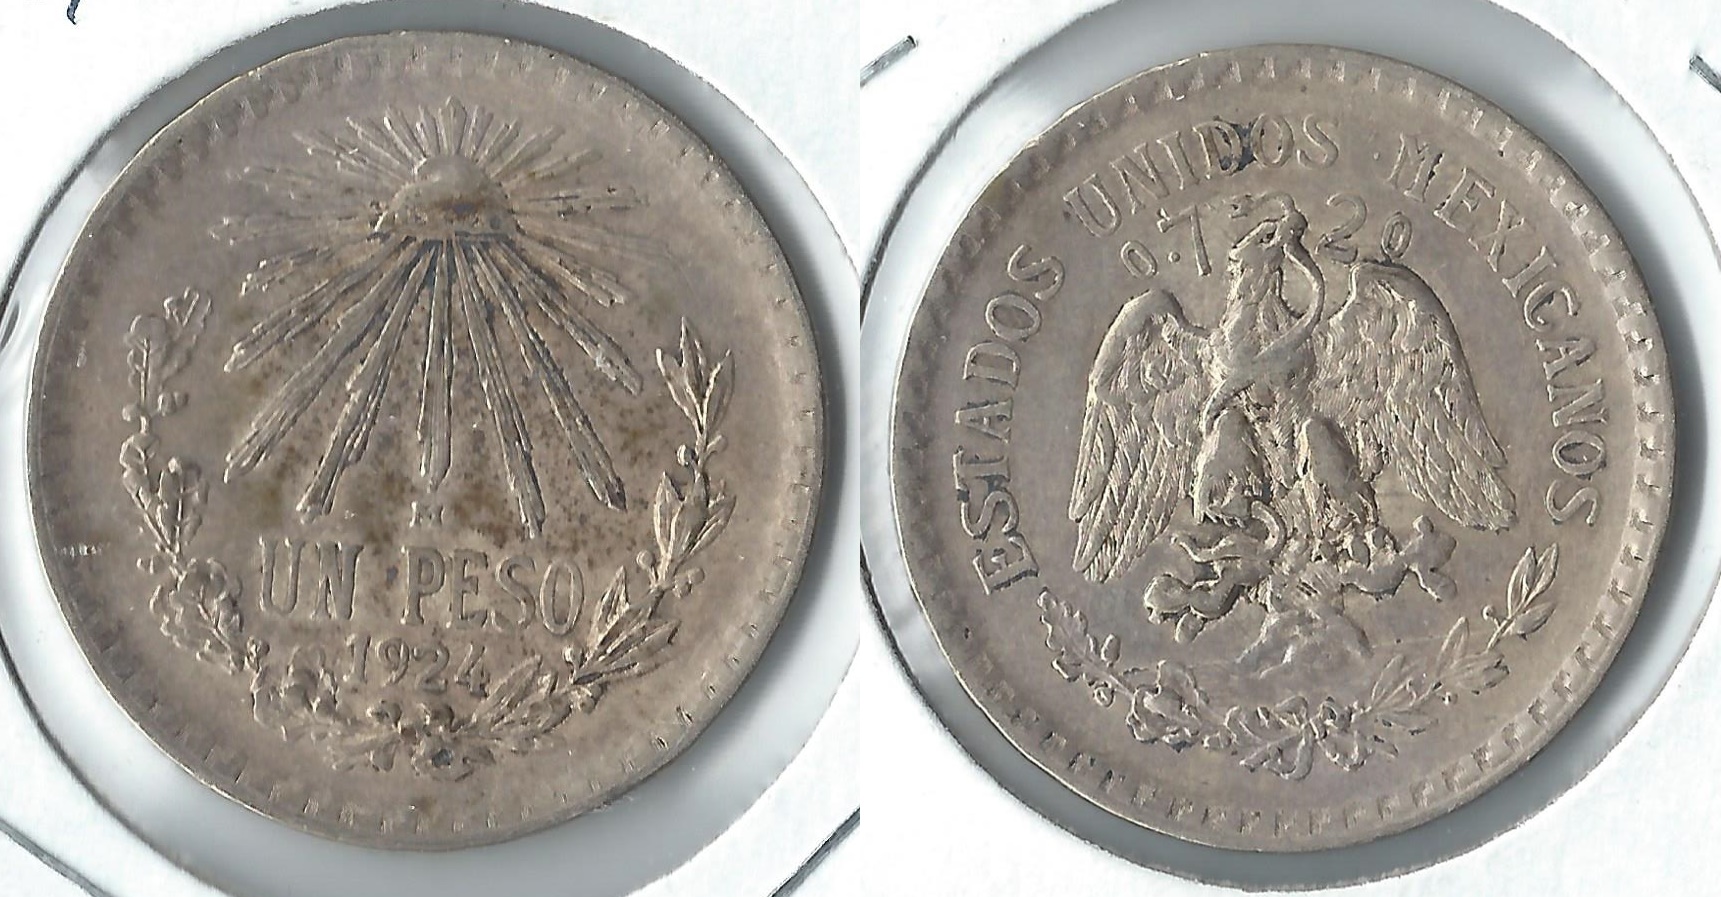 1924 mexico 1 peso.jpg